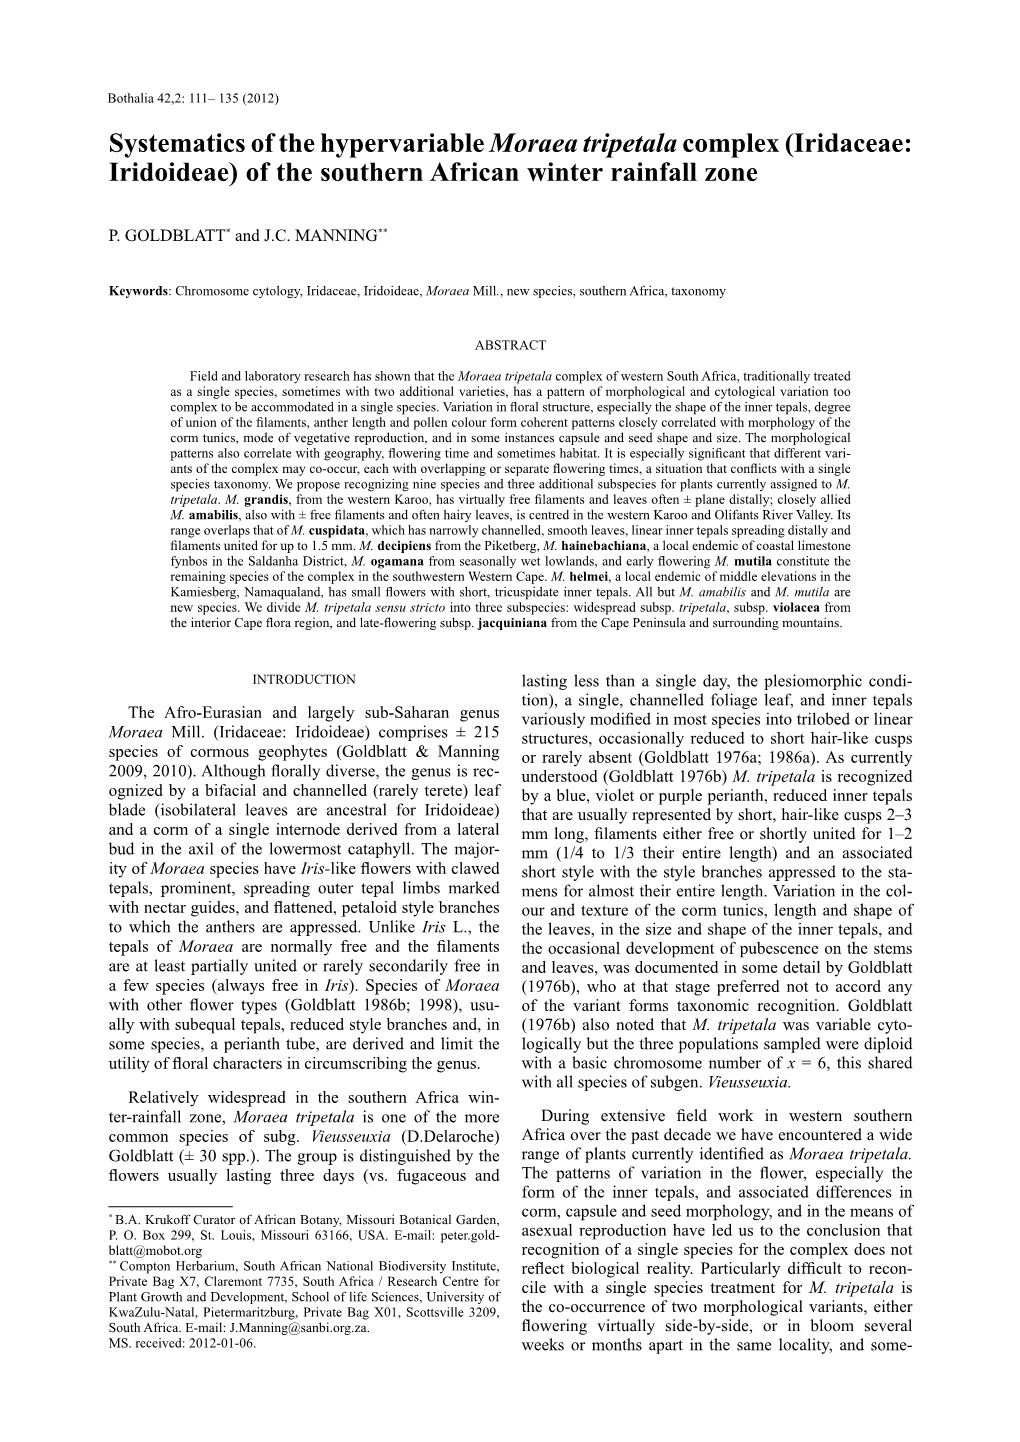 Systematics of the Hypervariable Moraea Tripetalacomplex